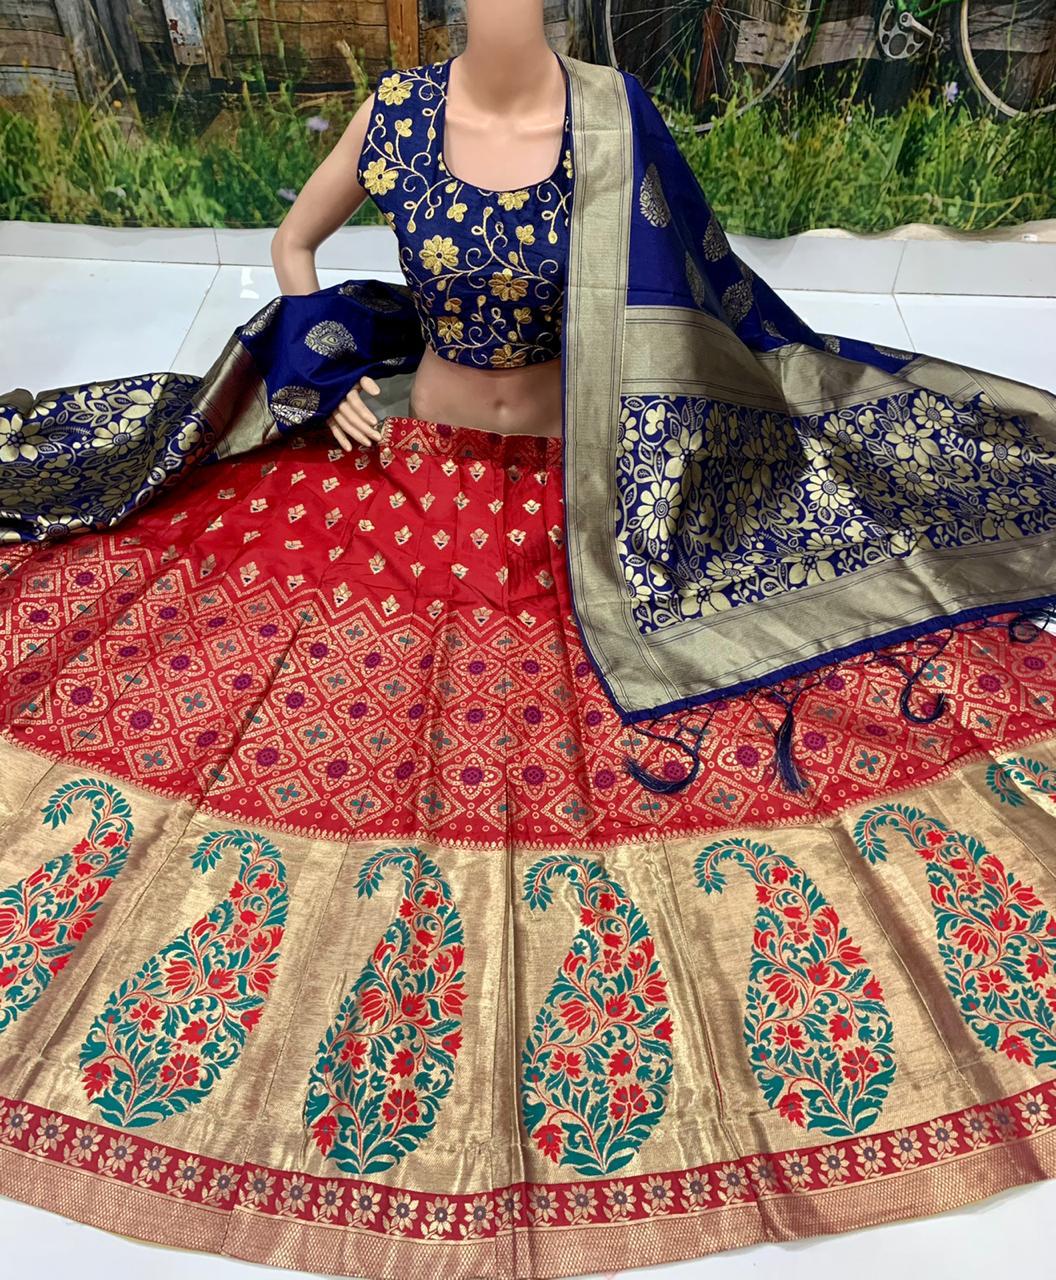 Pure Silk Embroidered Red and Green Lehenga Choli Online India & USA –  Sunasa